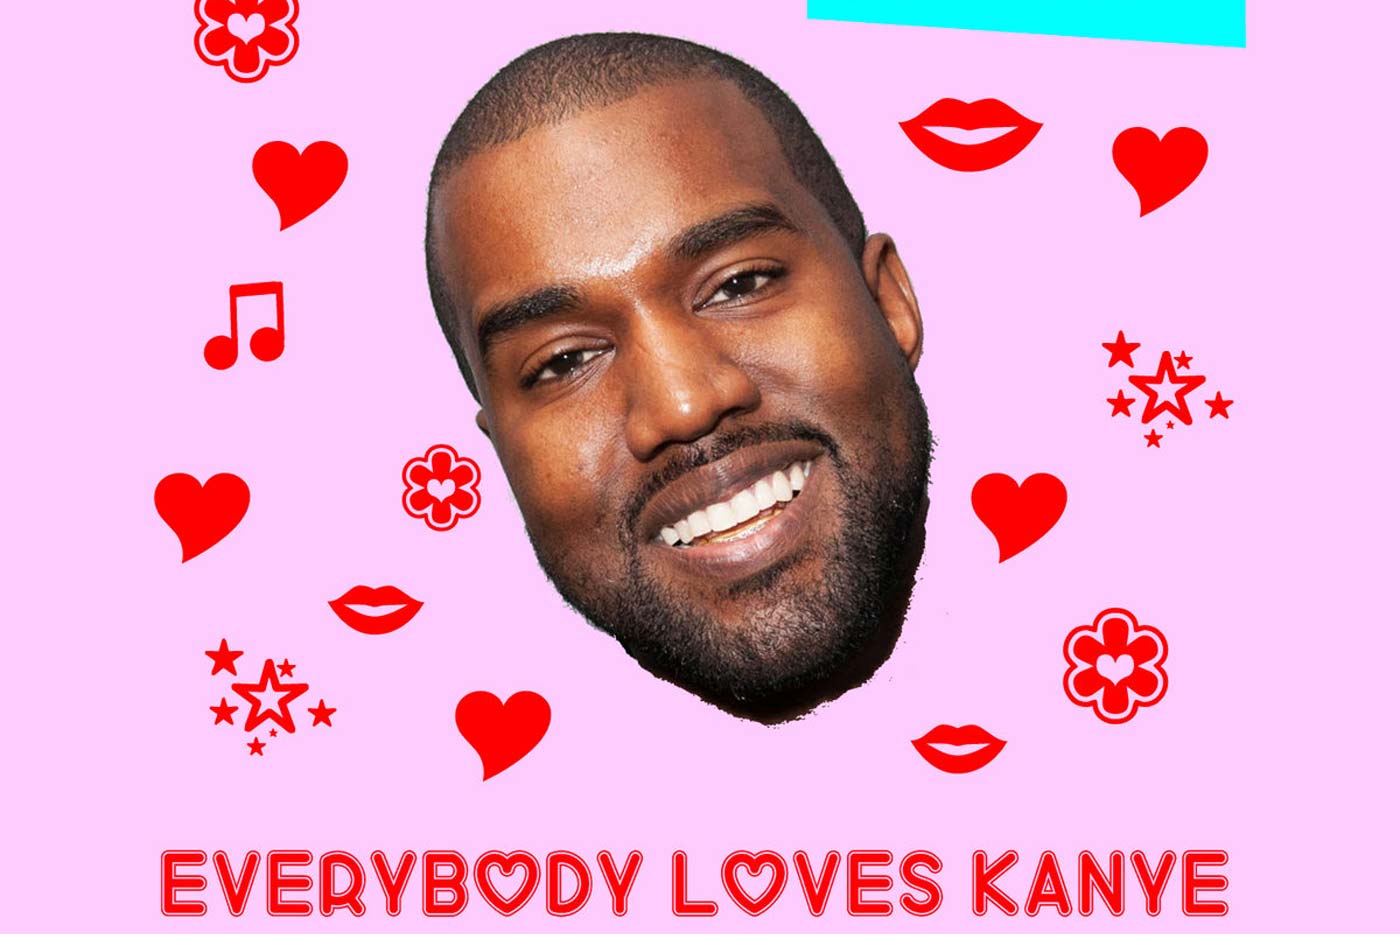 Todo el mundo ama a Kanye West